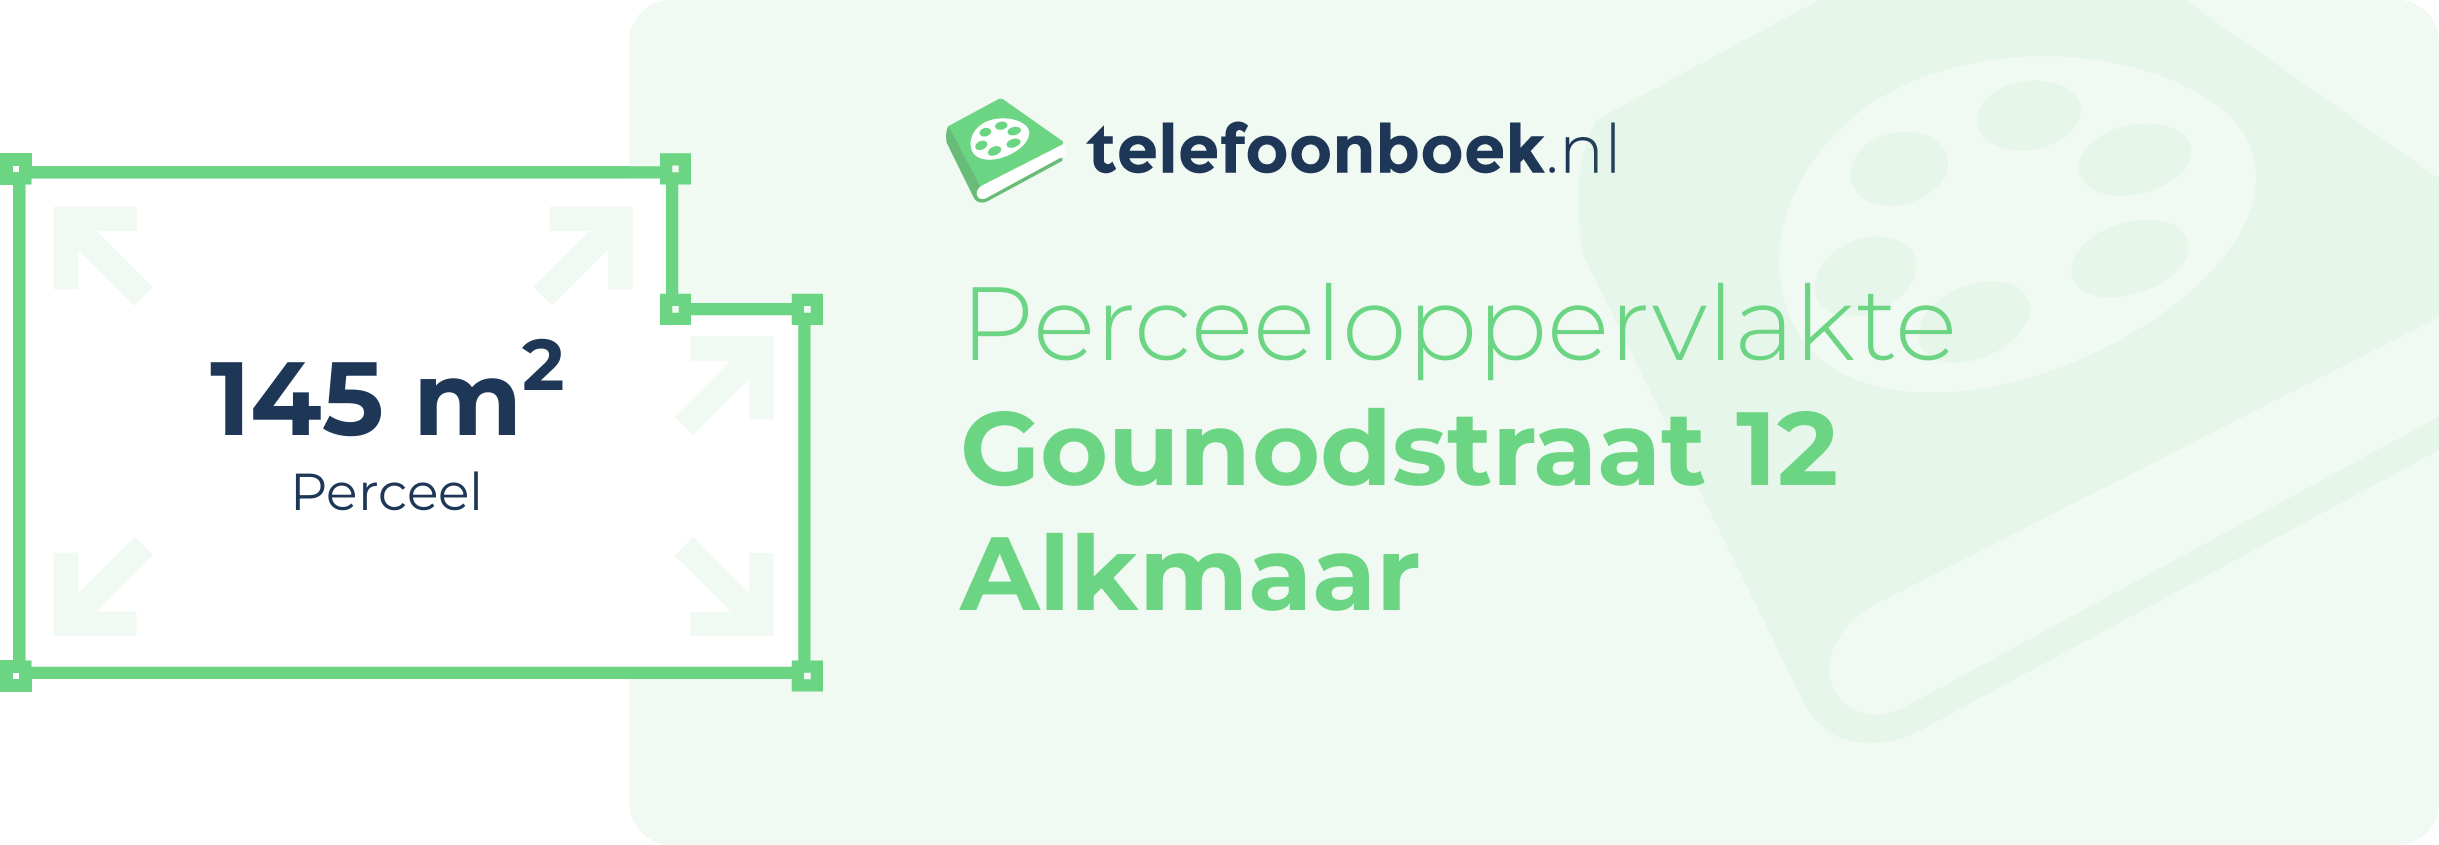 Perceeloppervlakte Gounodstraat 12 Alkmaar